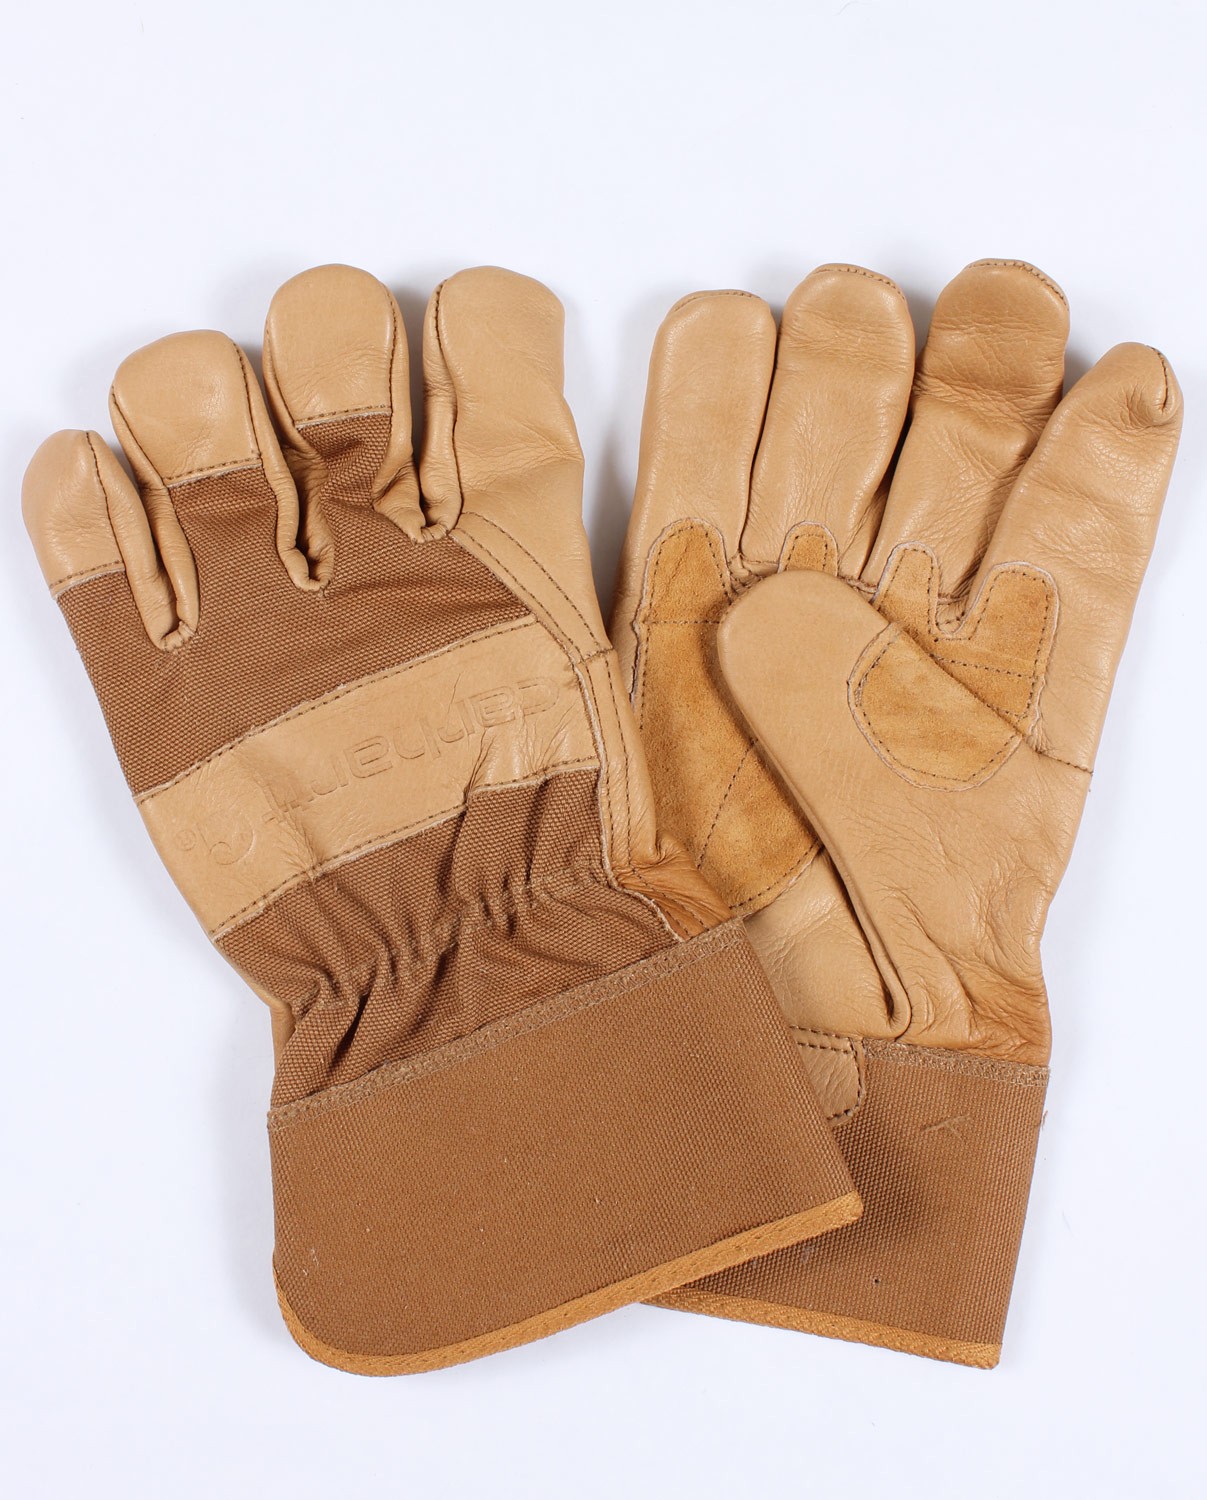 Carhartt® Men's Leather Work Gloves